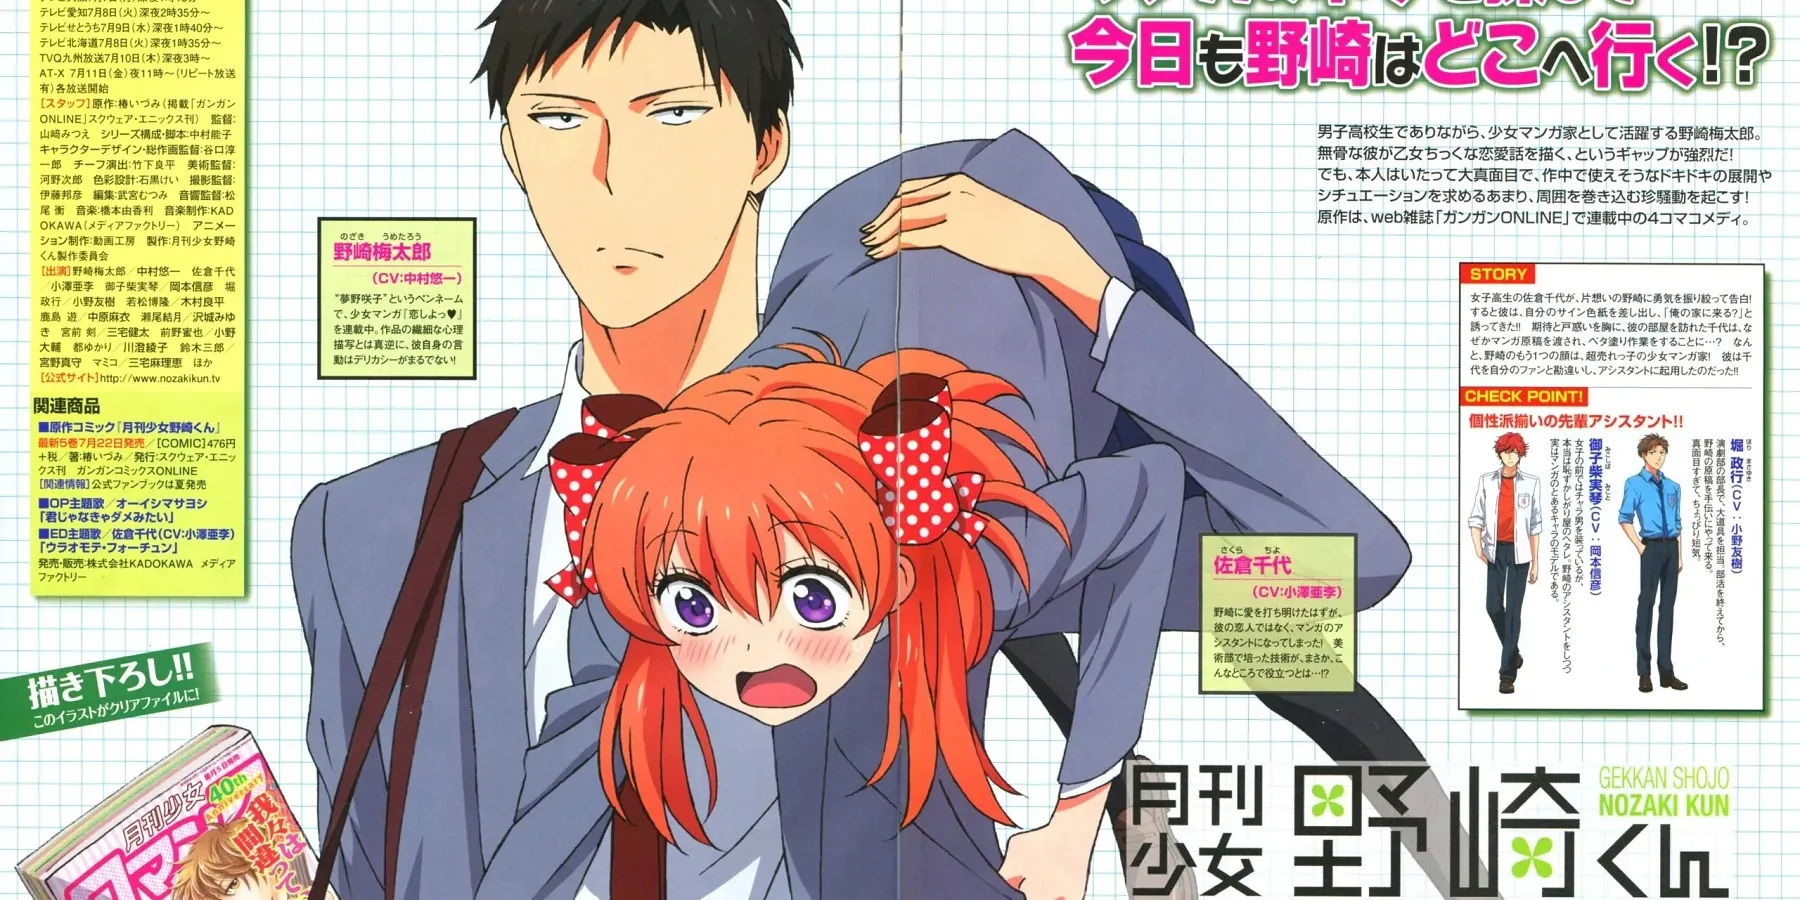 Protagonisti Imperfetti nei Manga Romantici - Monthly Girls’ Nozaki-kun